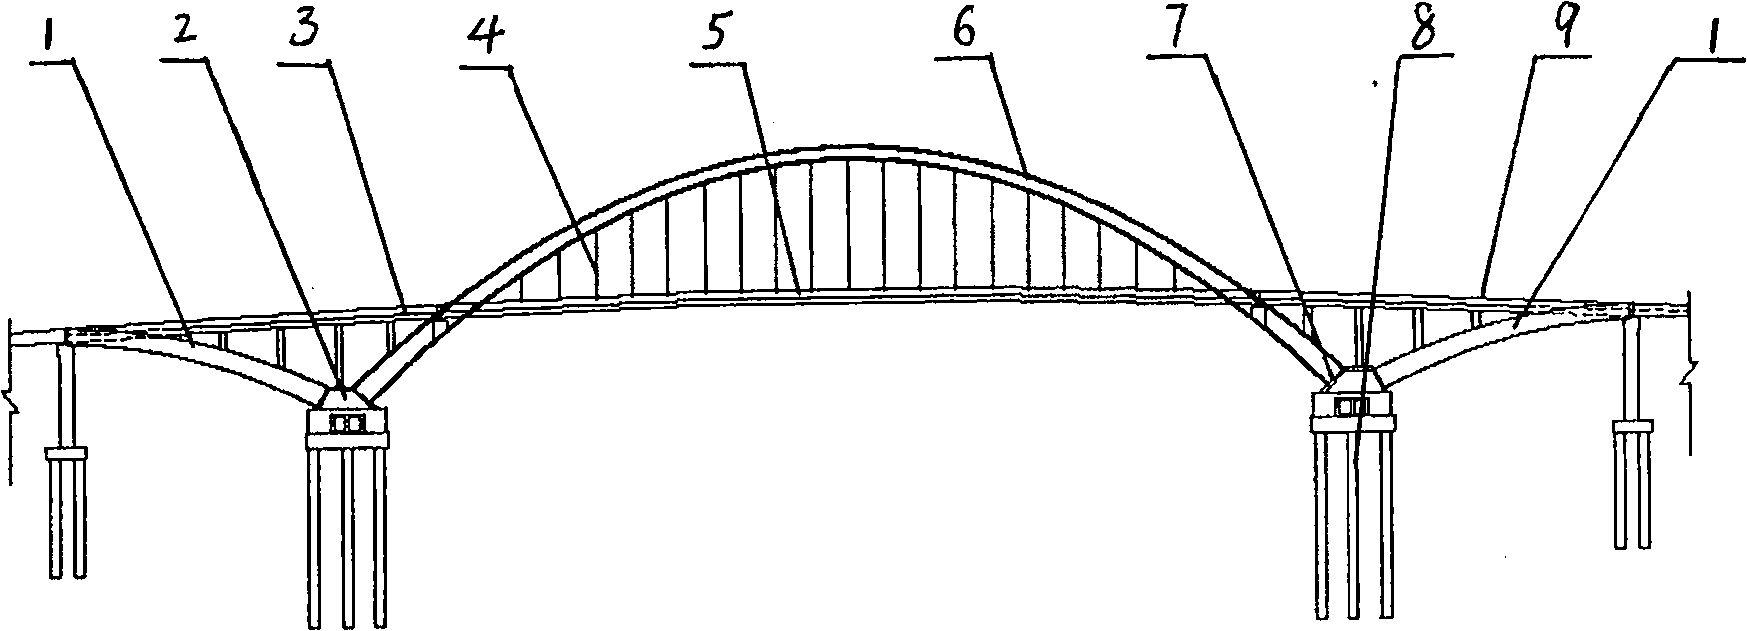 Construction method for bridge steel box basket arch